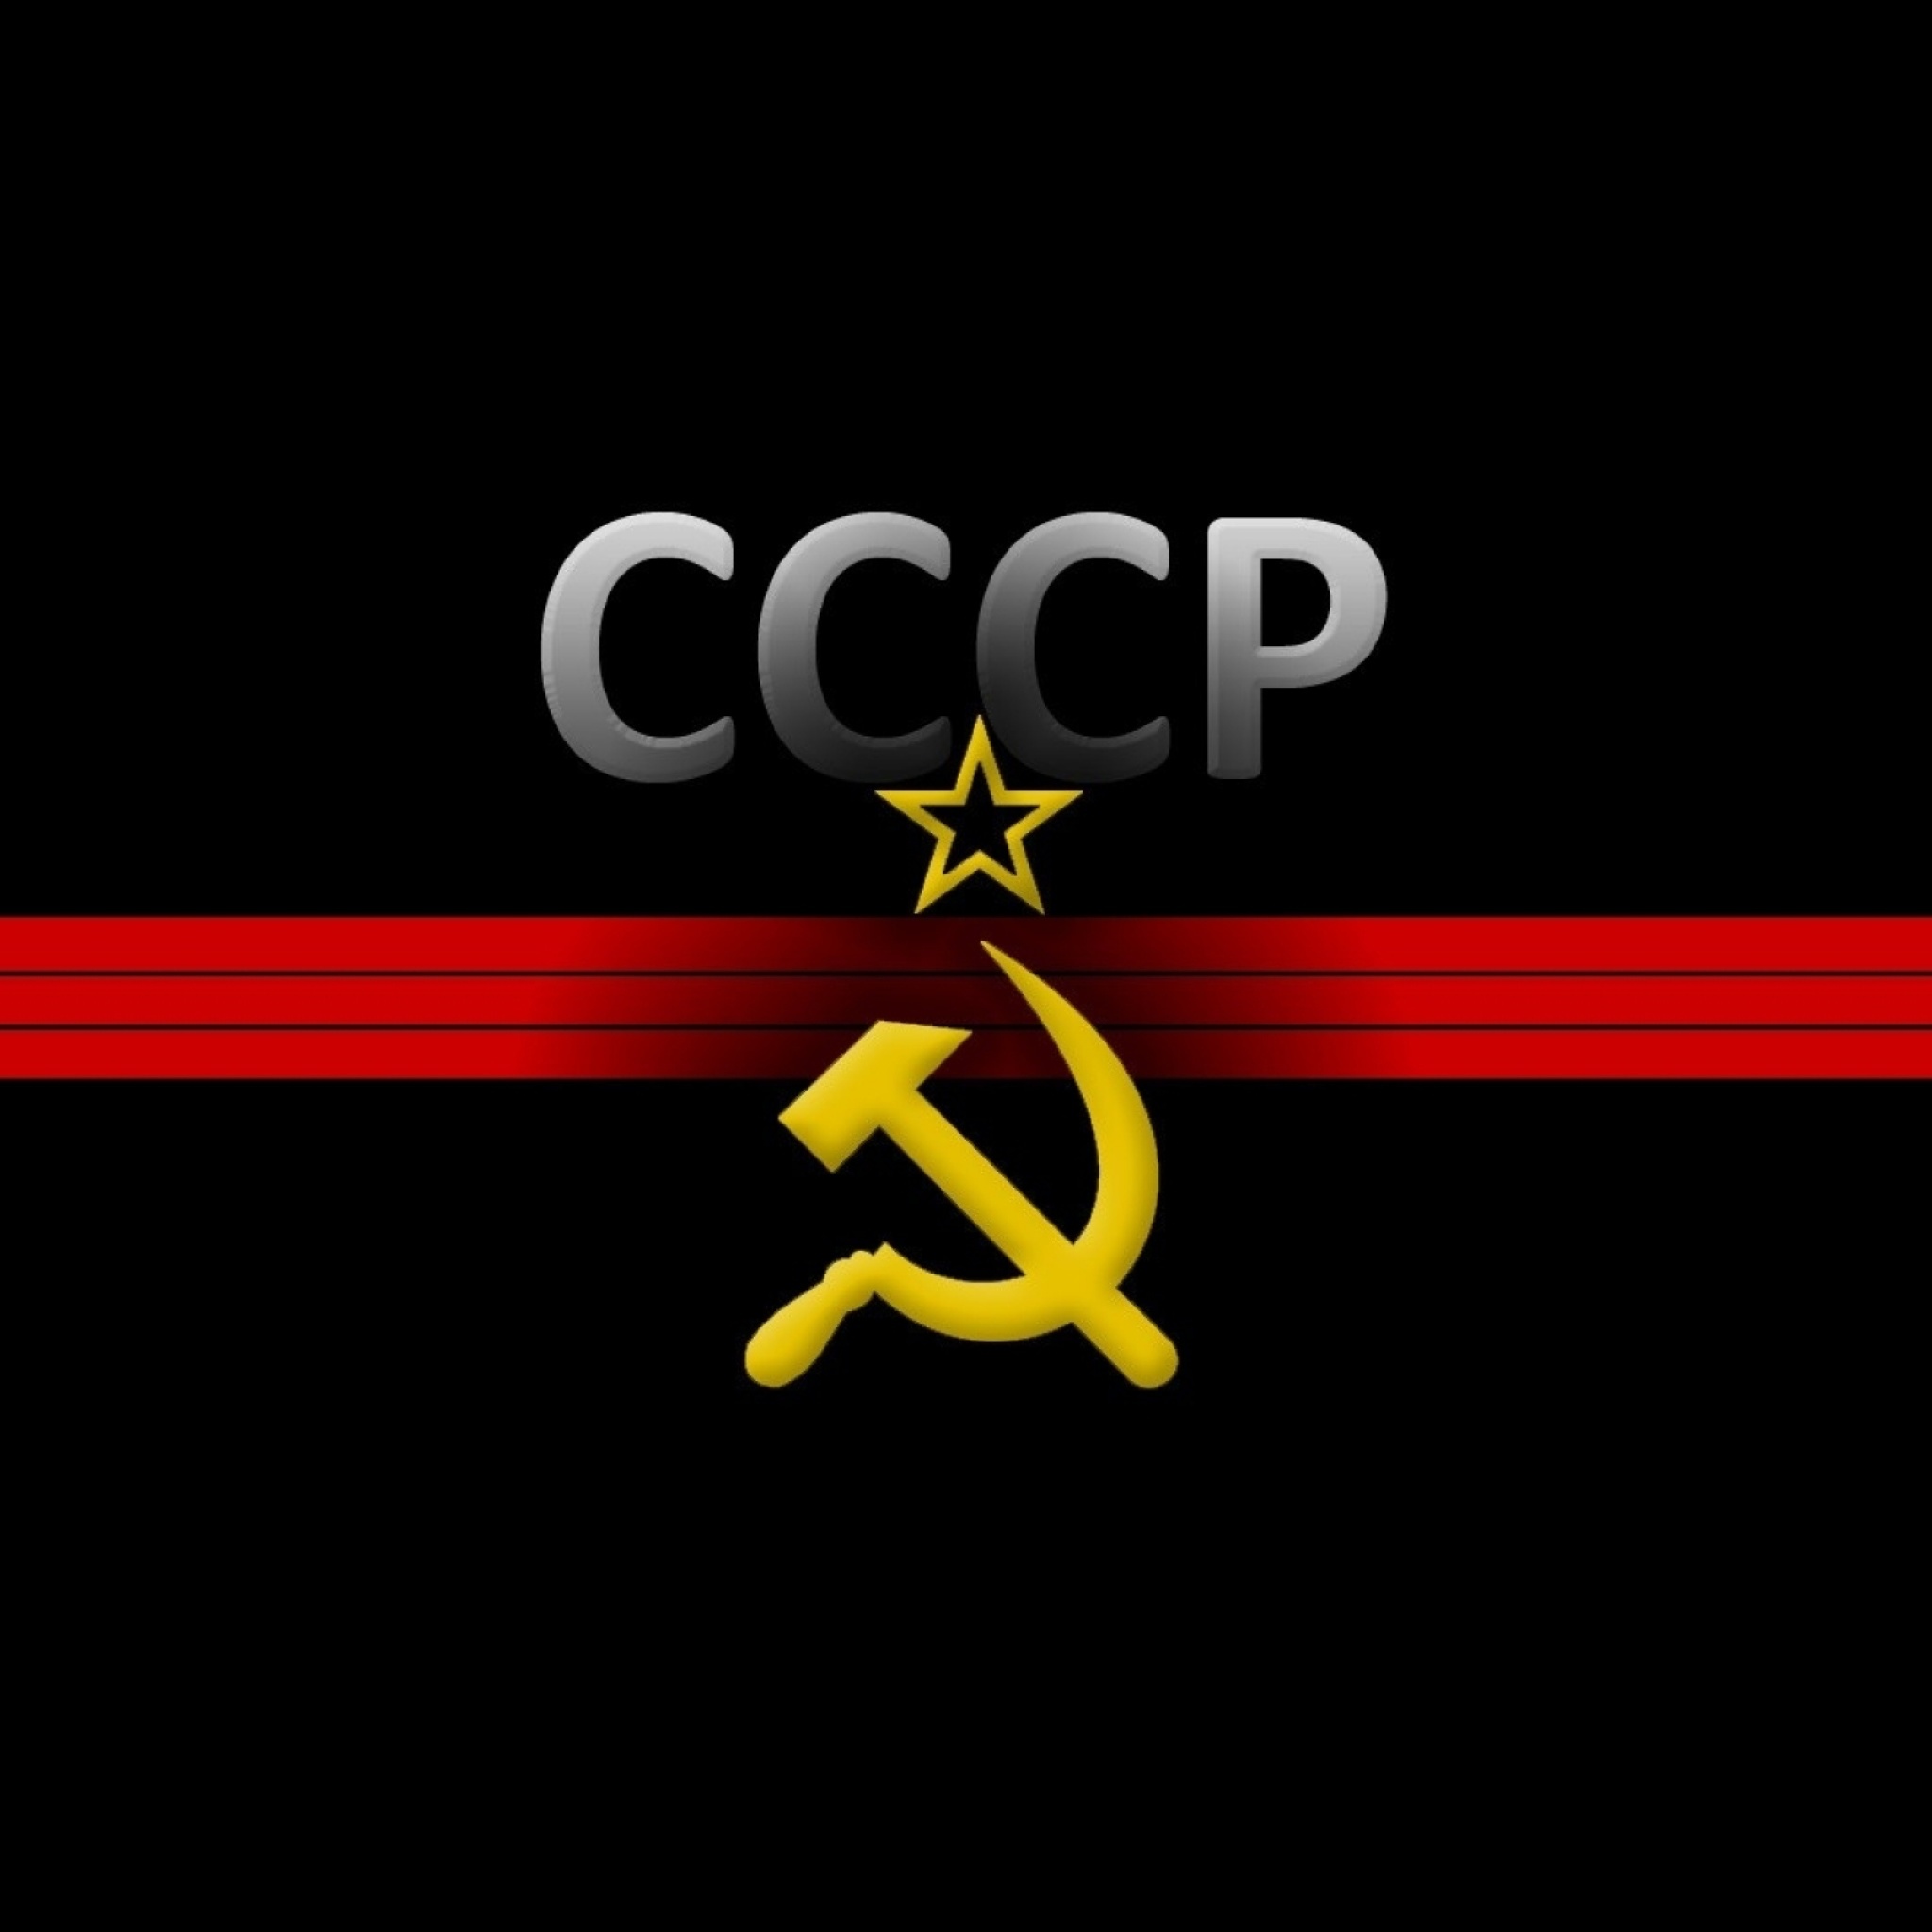 USSR and Communism Symbol wallpaper 2048x2048